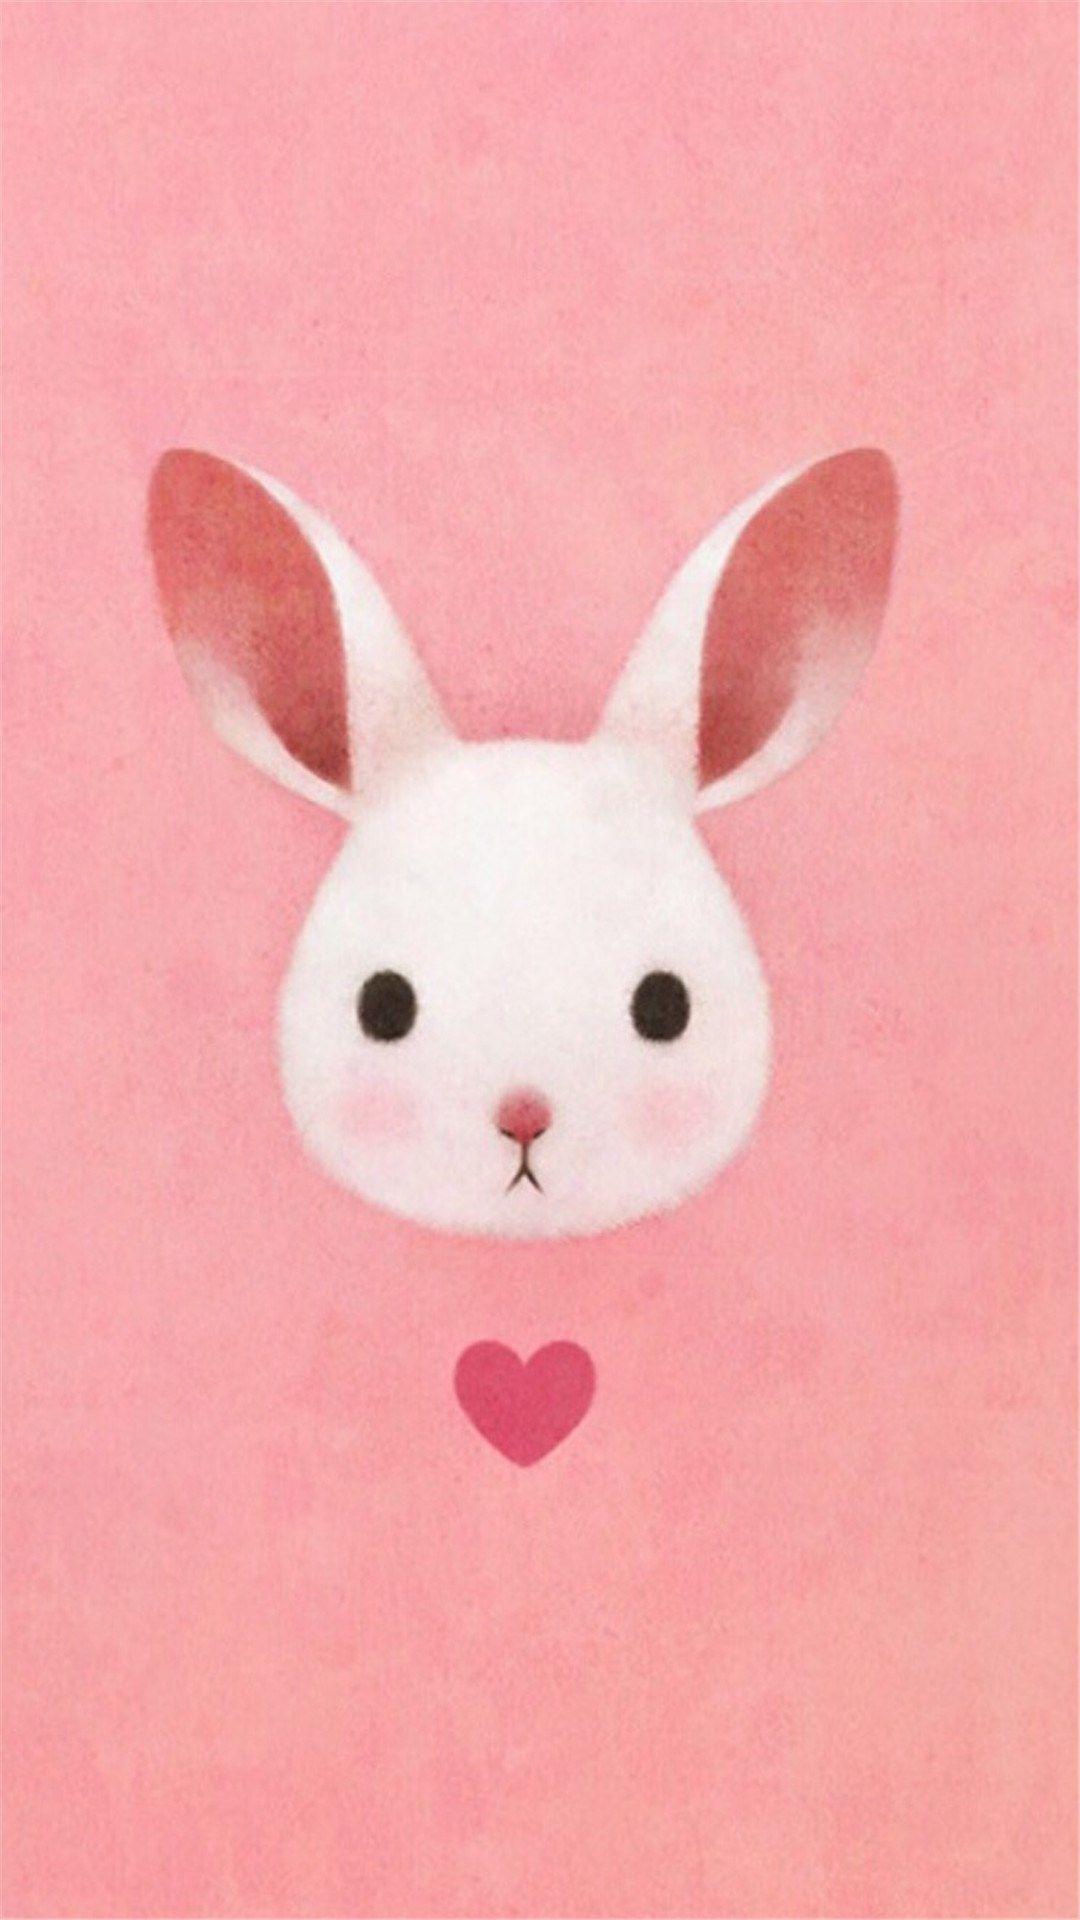 Cute Lovely Pink Rabbit Drawing Art iPhone 8 Wallpaper. ウサギの